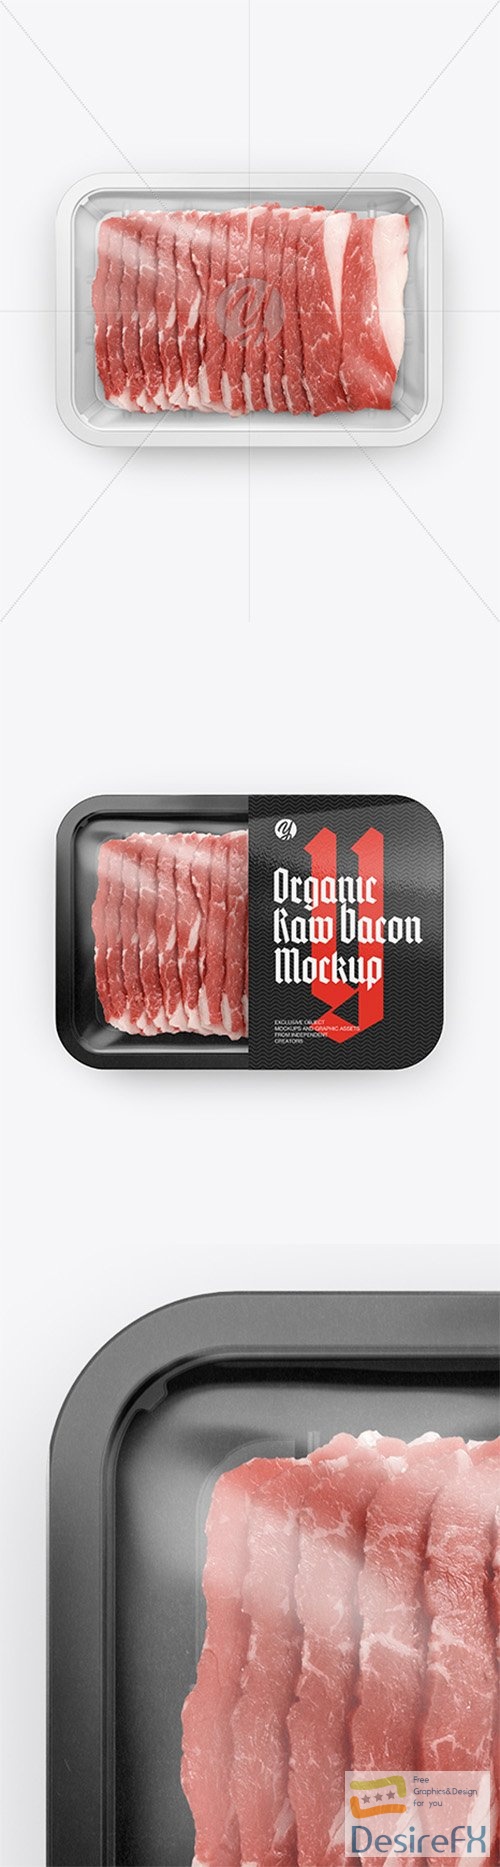 Plastic Tray With Raw Bacon Mockup 34242 TIF